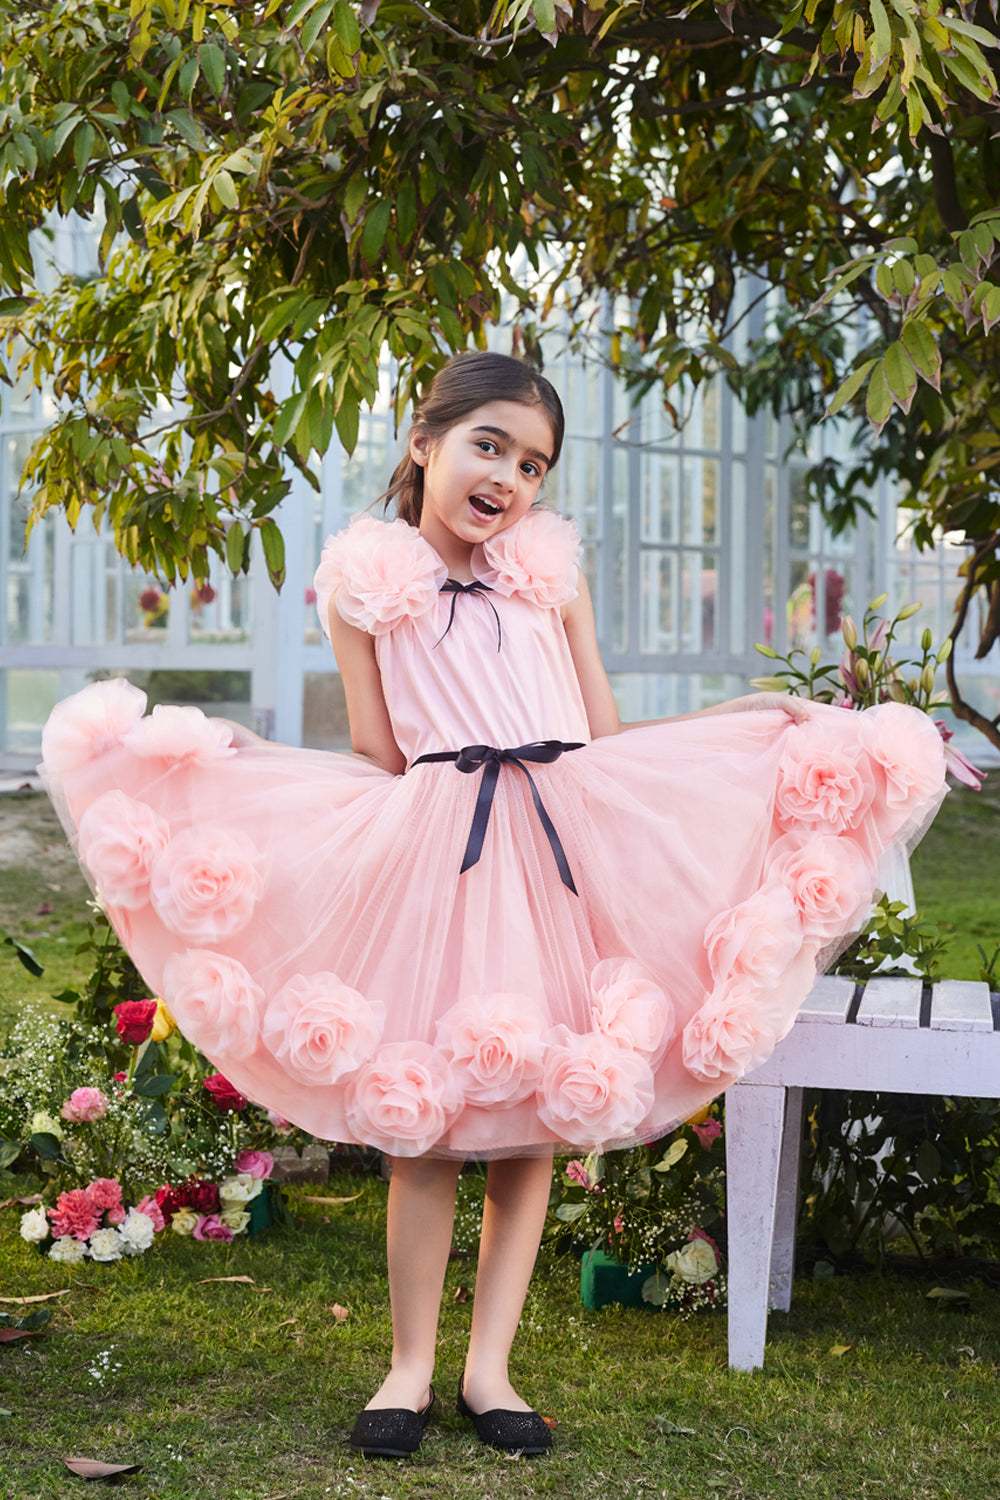 The Peach Blossoms' Dress